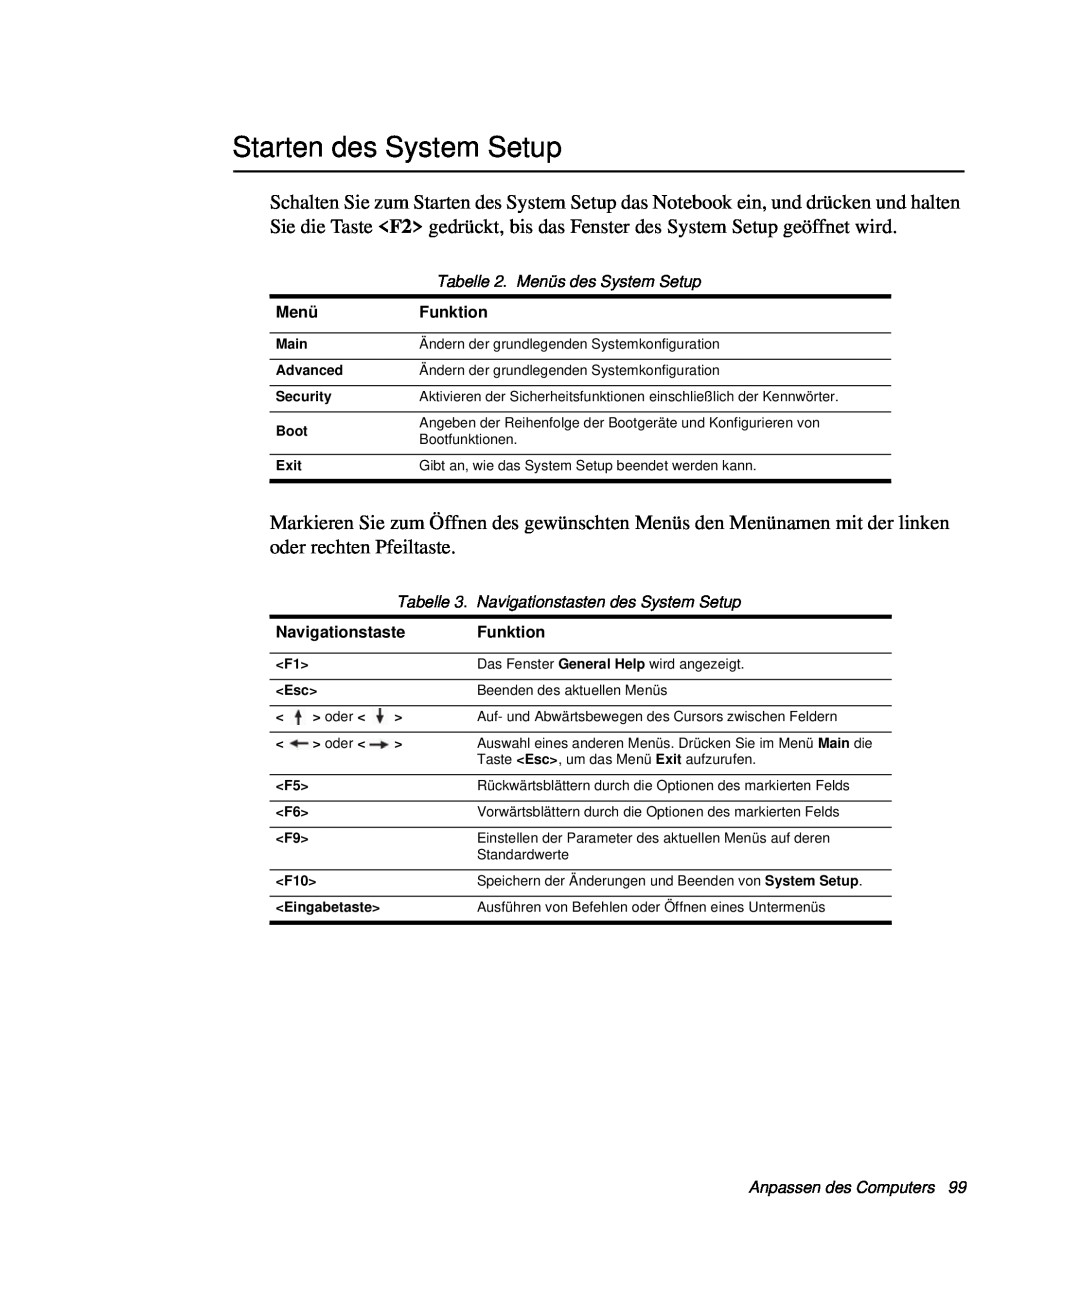 Samsung NP-X60C001/SEG, NP-X60TV02/SEG Starten des System Setup, Tabelle 2. Menüs des System Setup, Anpassen des Computers 